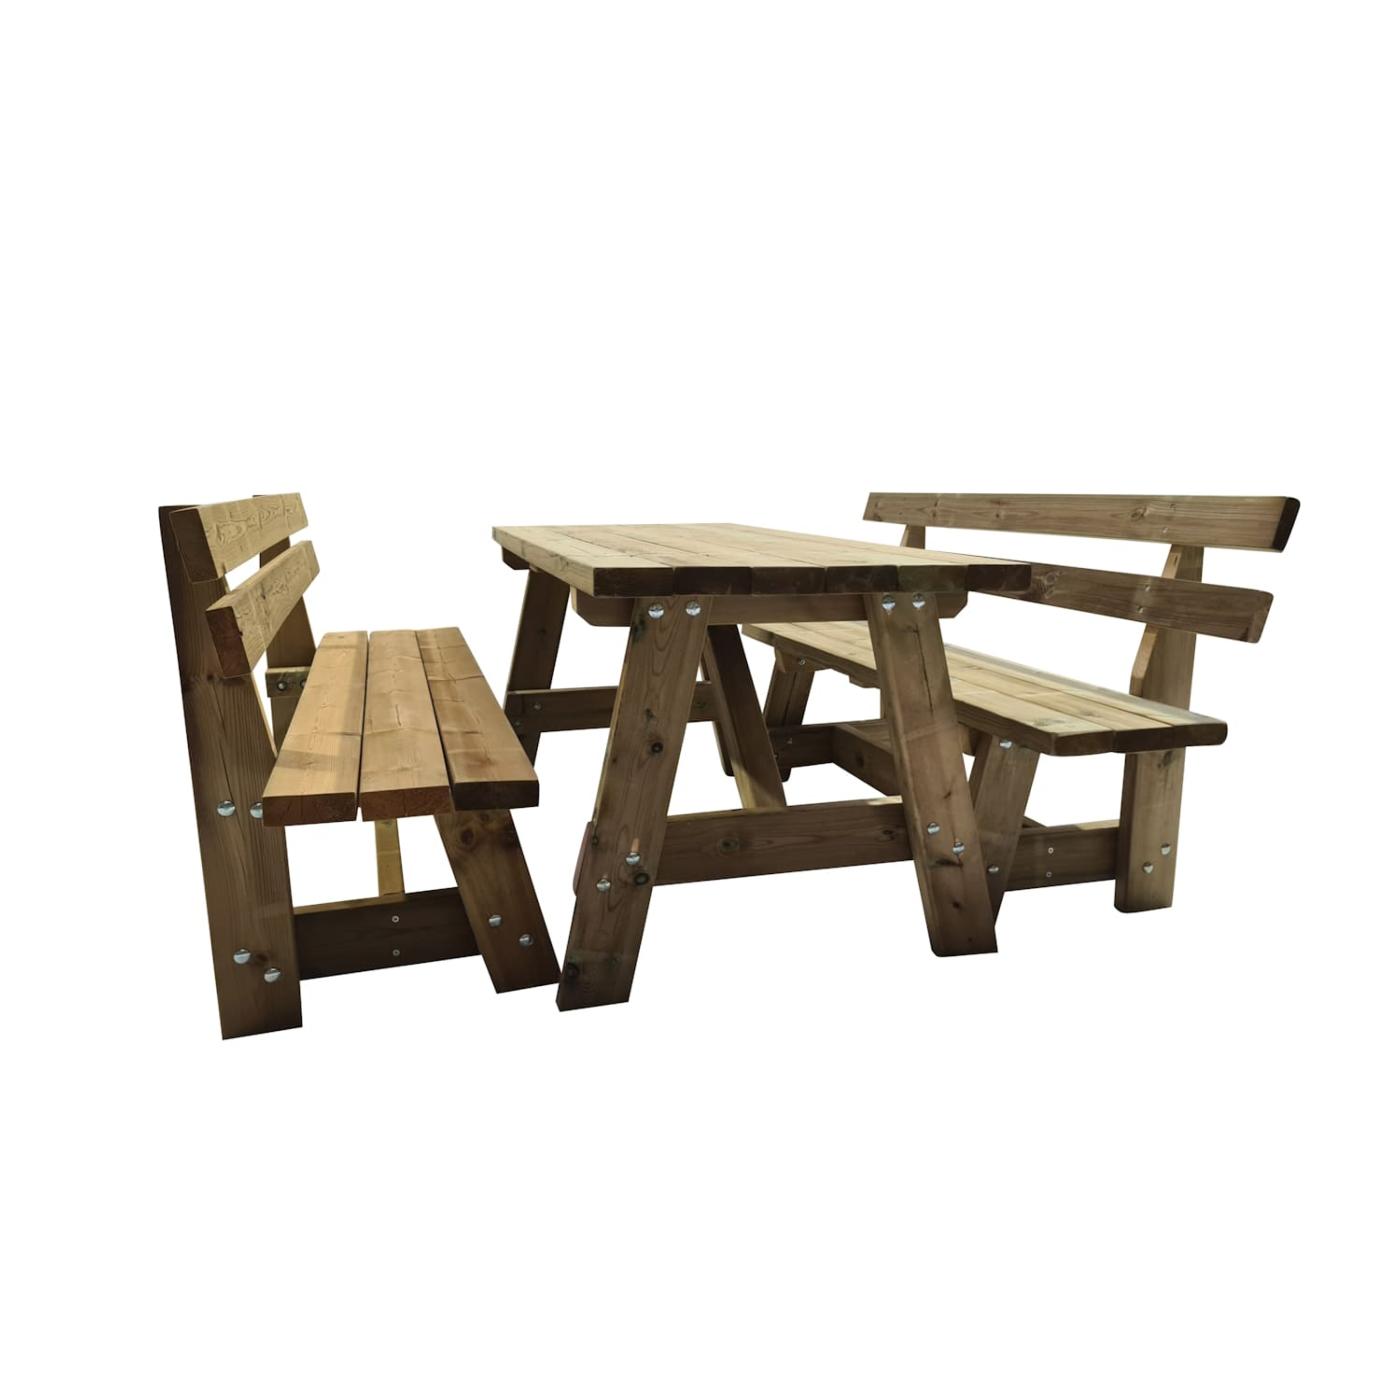 Mesa de madera de exterior ZURICH con bancos con respaldo VIC MASGAMES